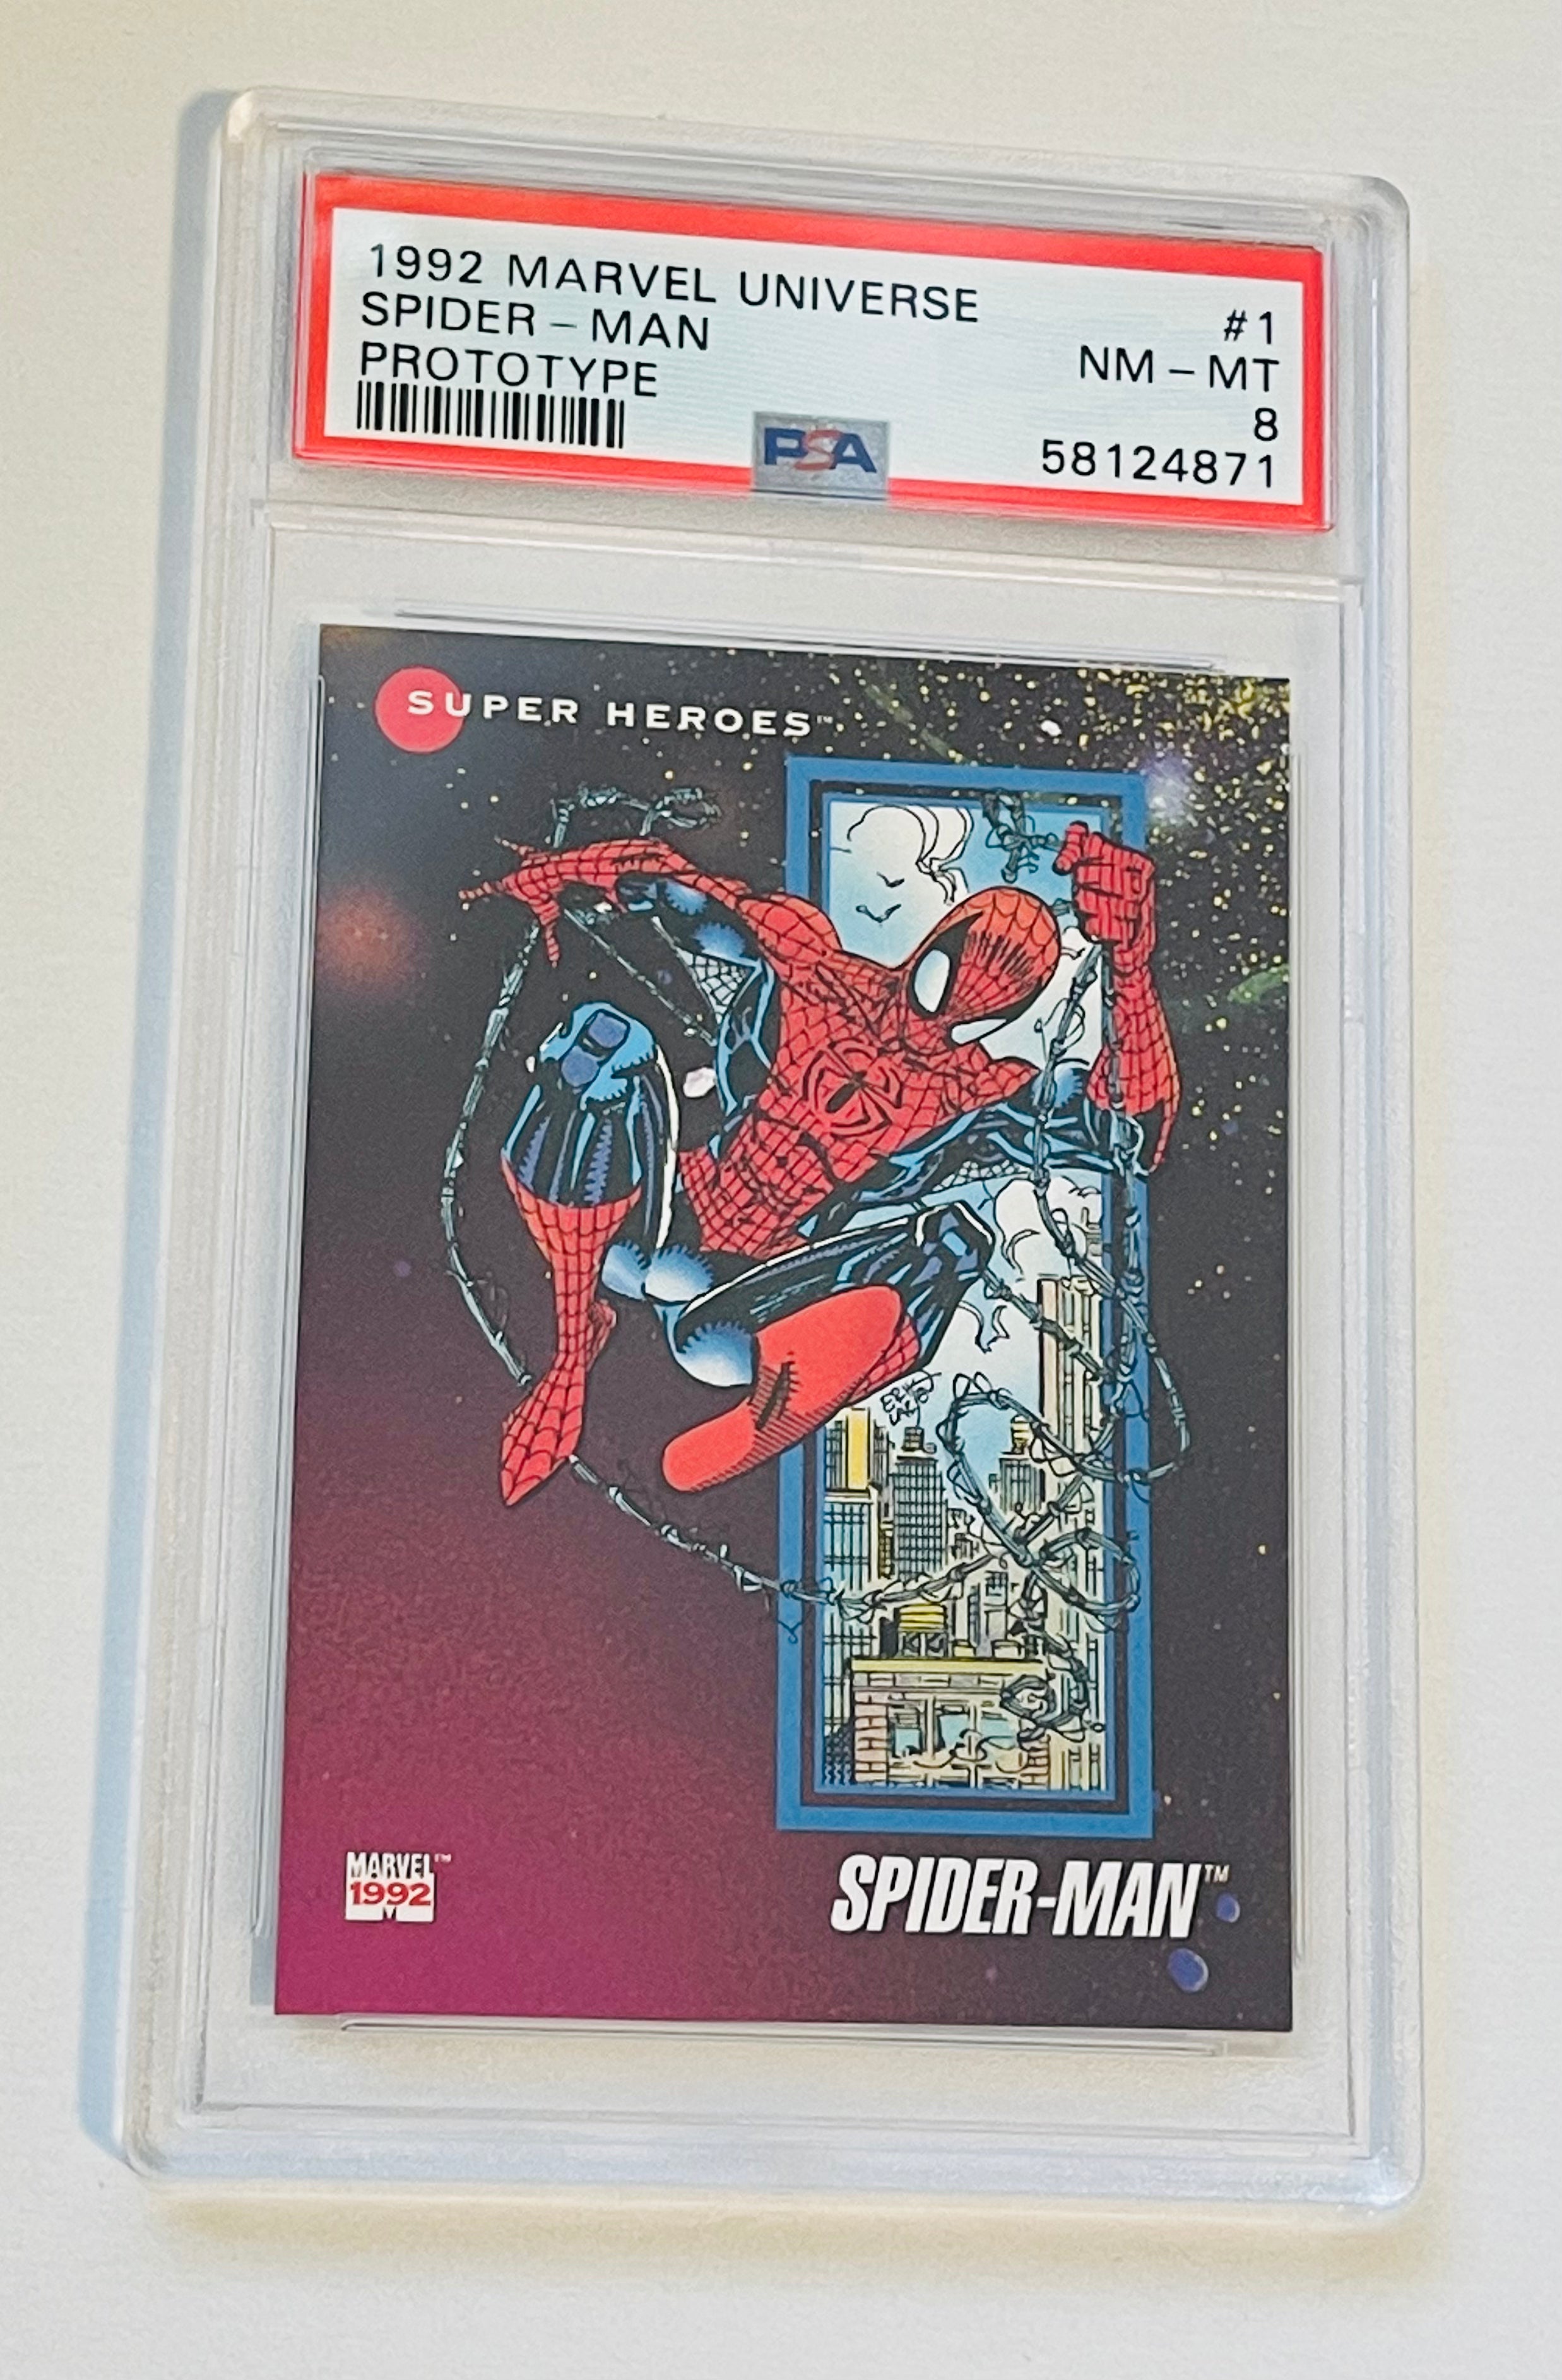 Spider-Man Marvel Universe PSA 8 card 1992